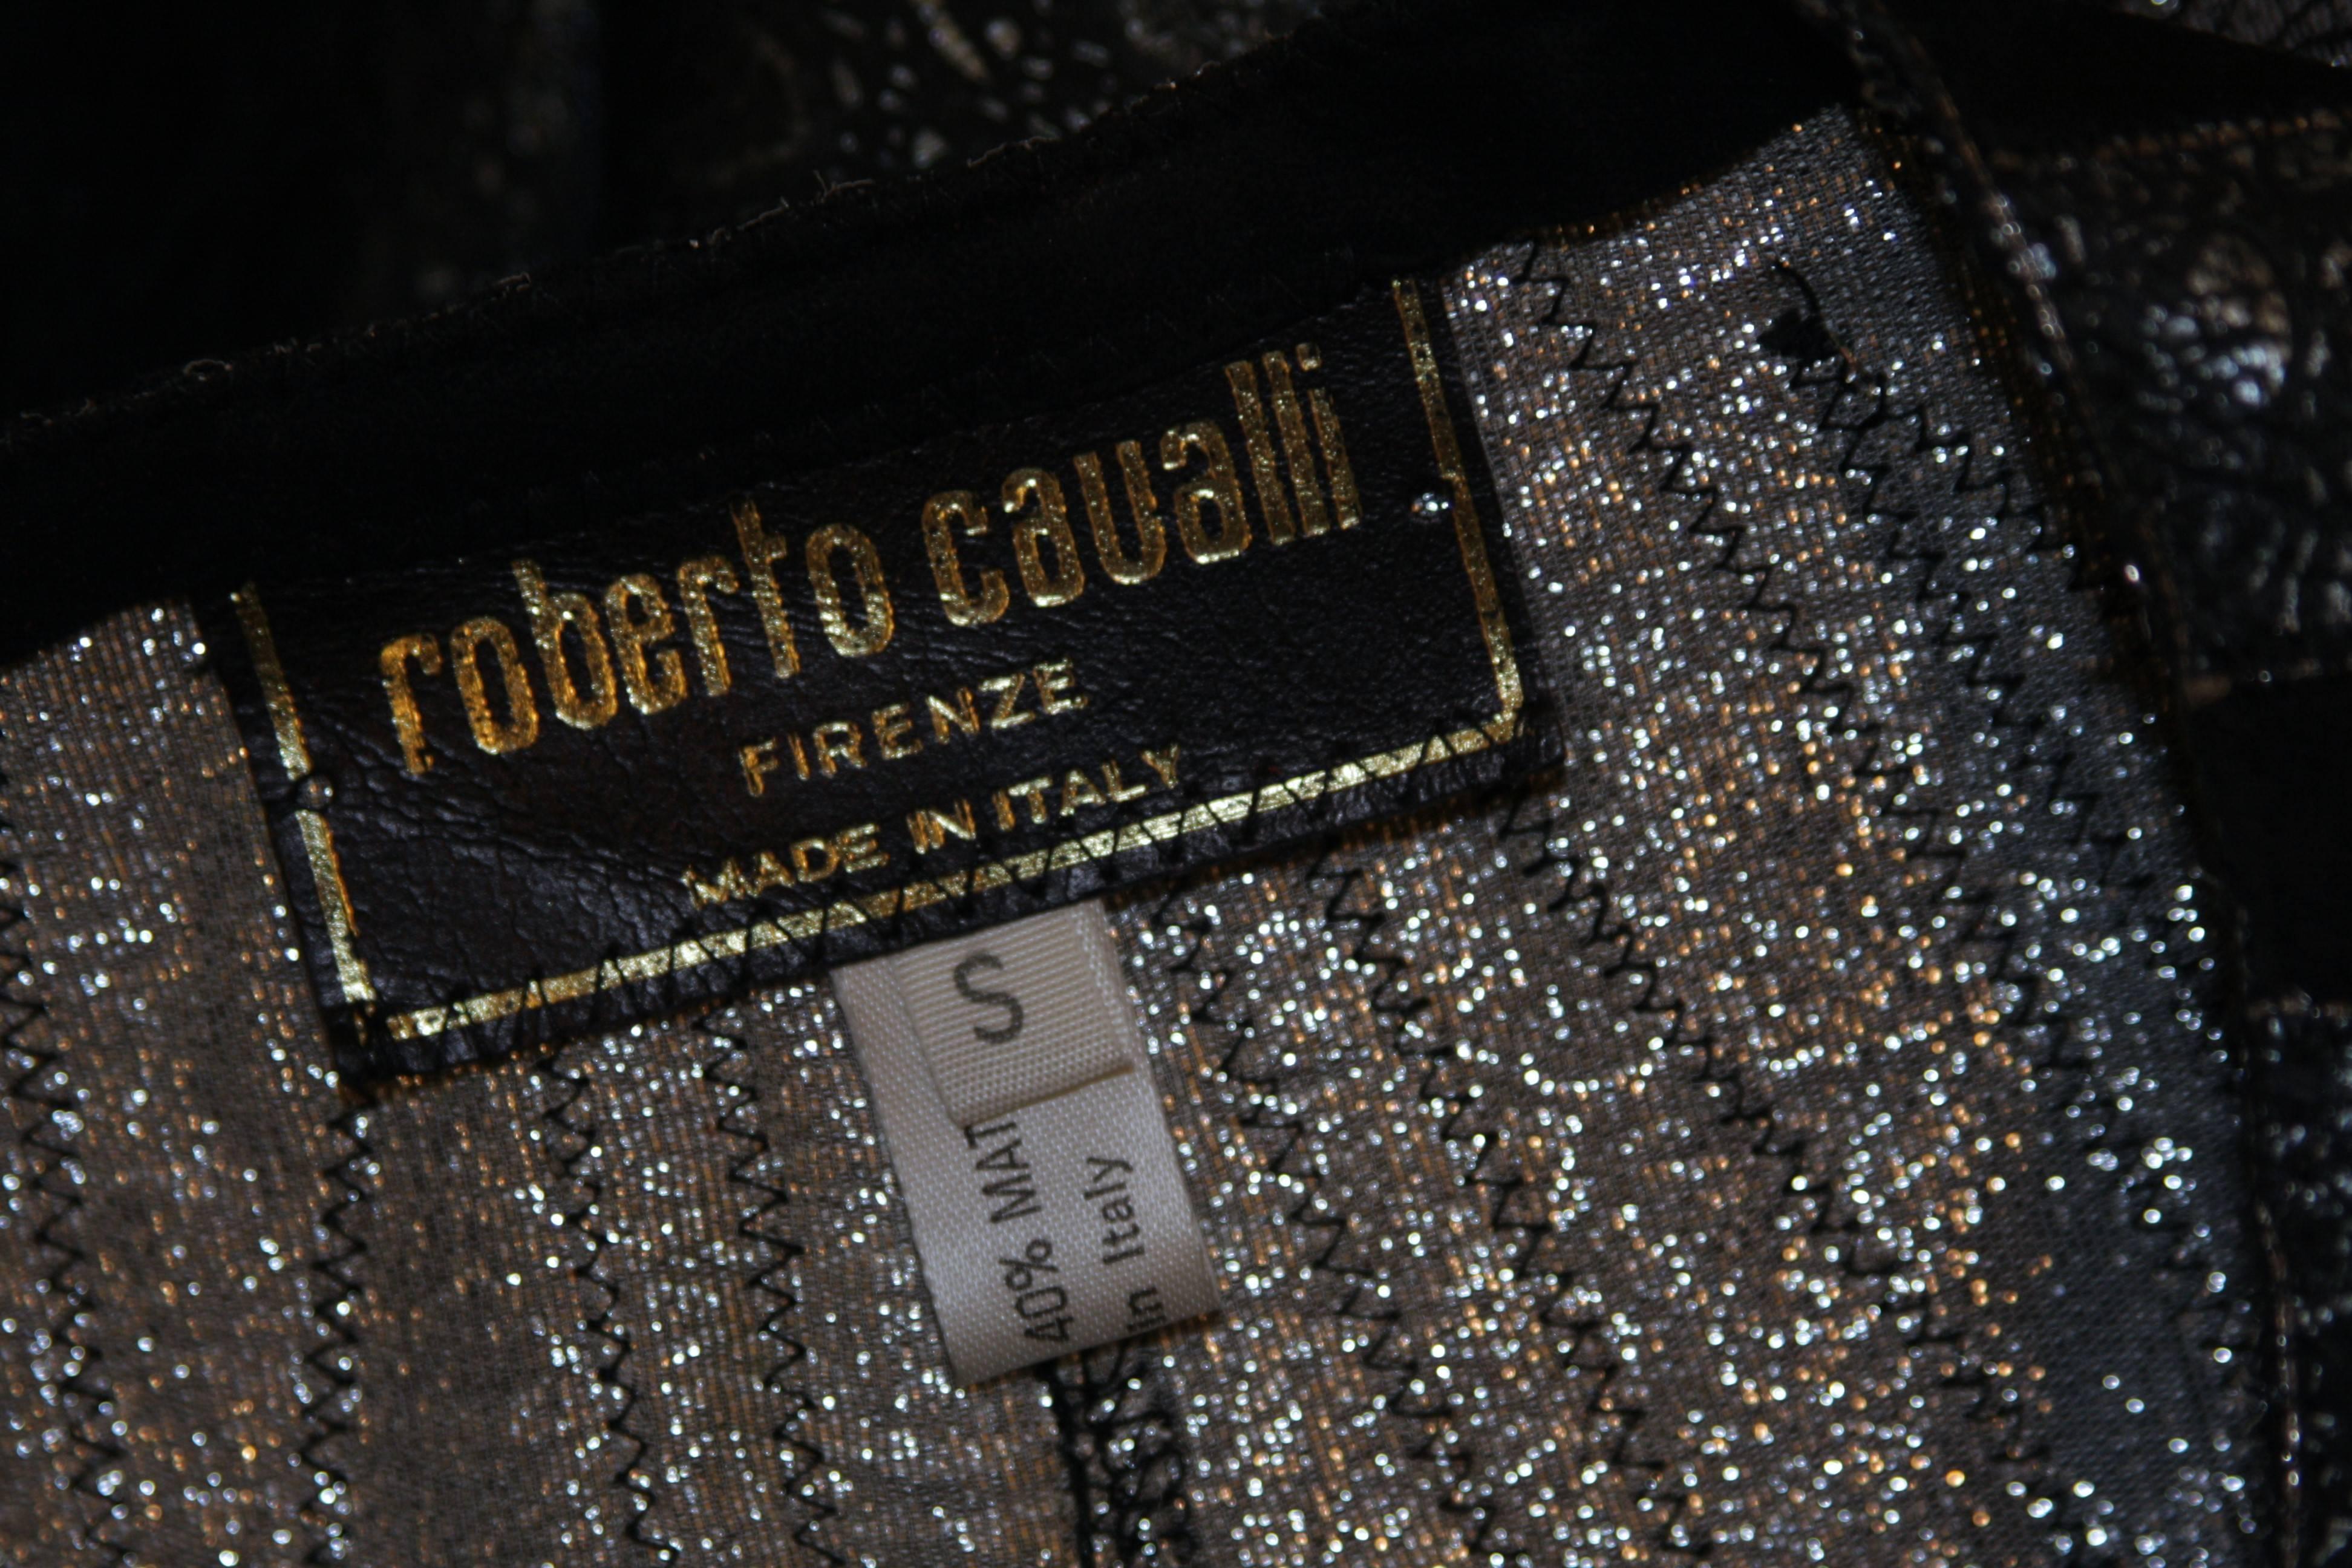 ROBERTO CAVALLI Lace Metallic Suede Dolman Jacket with Sash Belt Size Small 5